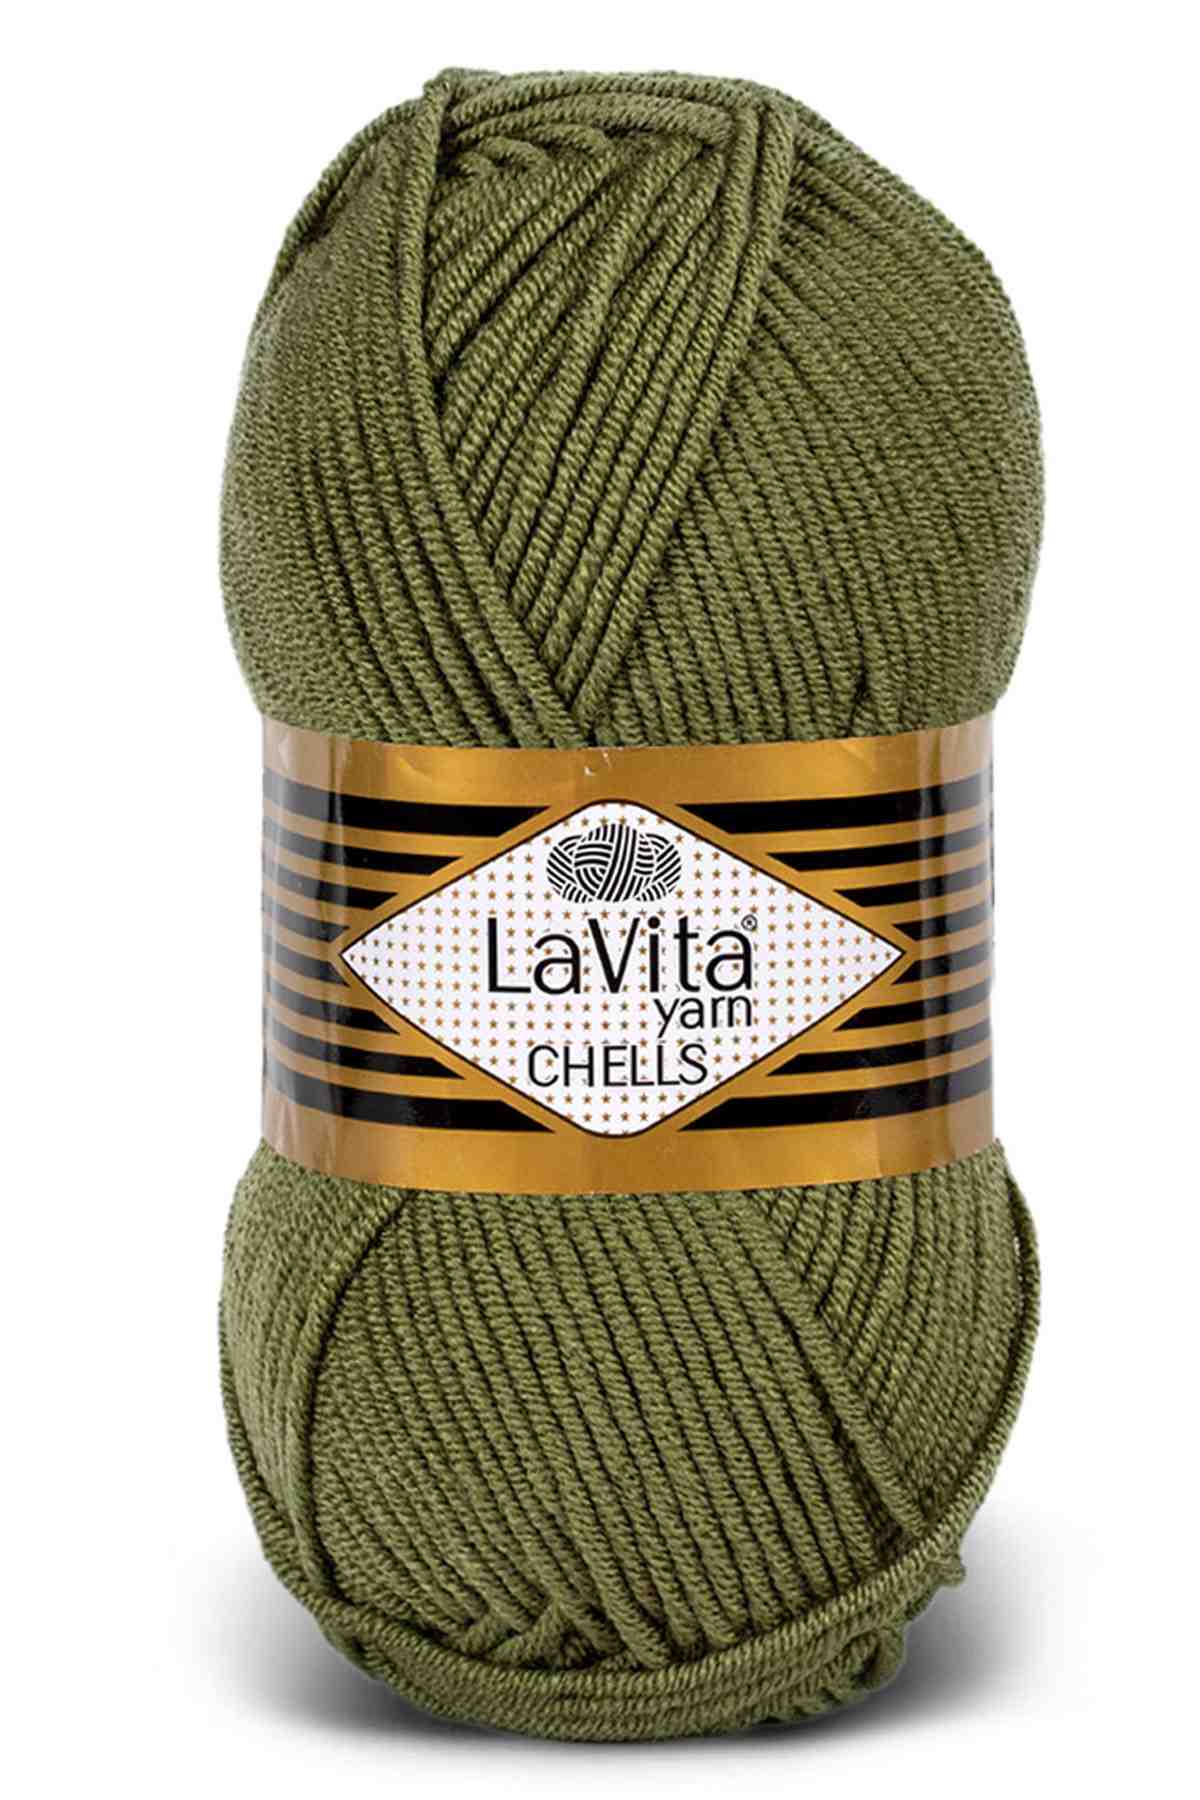 Lavita Chells Acrylic Yarn